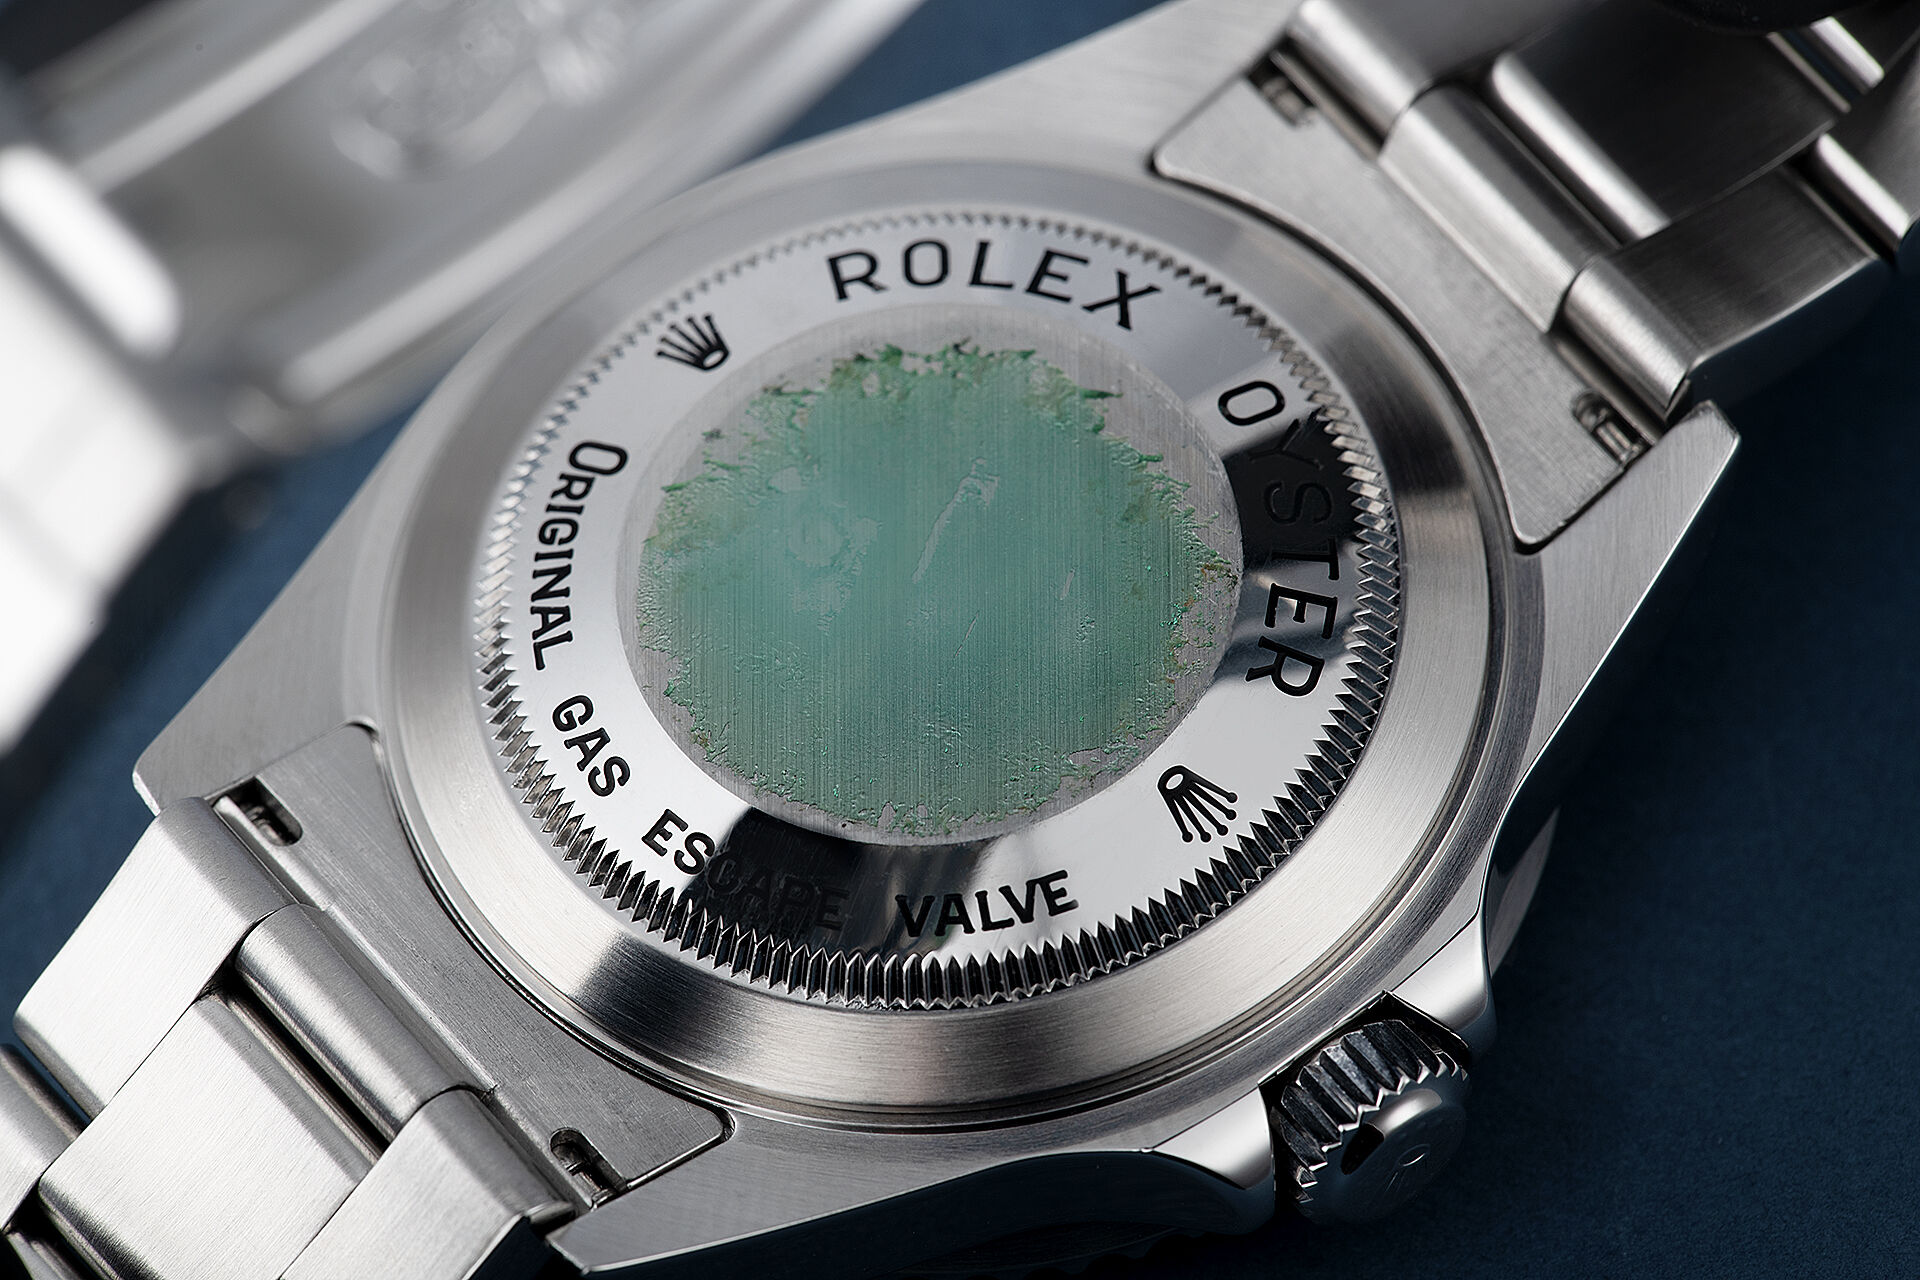 Brand New Old Stock | ref 16600 | Rolex Sea-Dweller